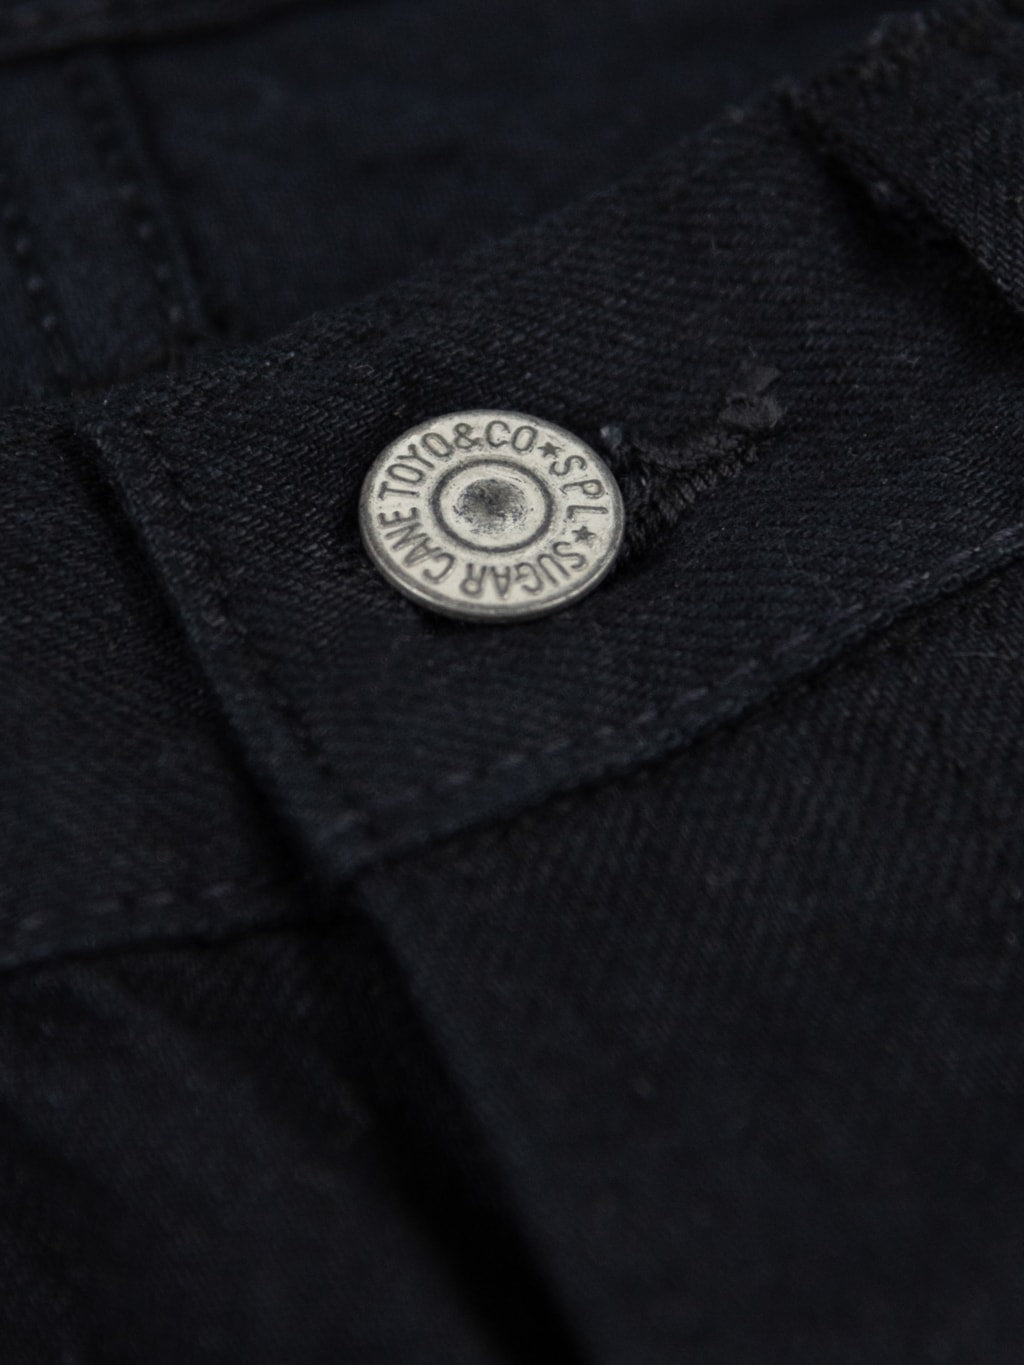 Sugar Cane Type III 13oz Black Denim Slim Jeans button closeup